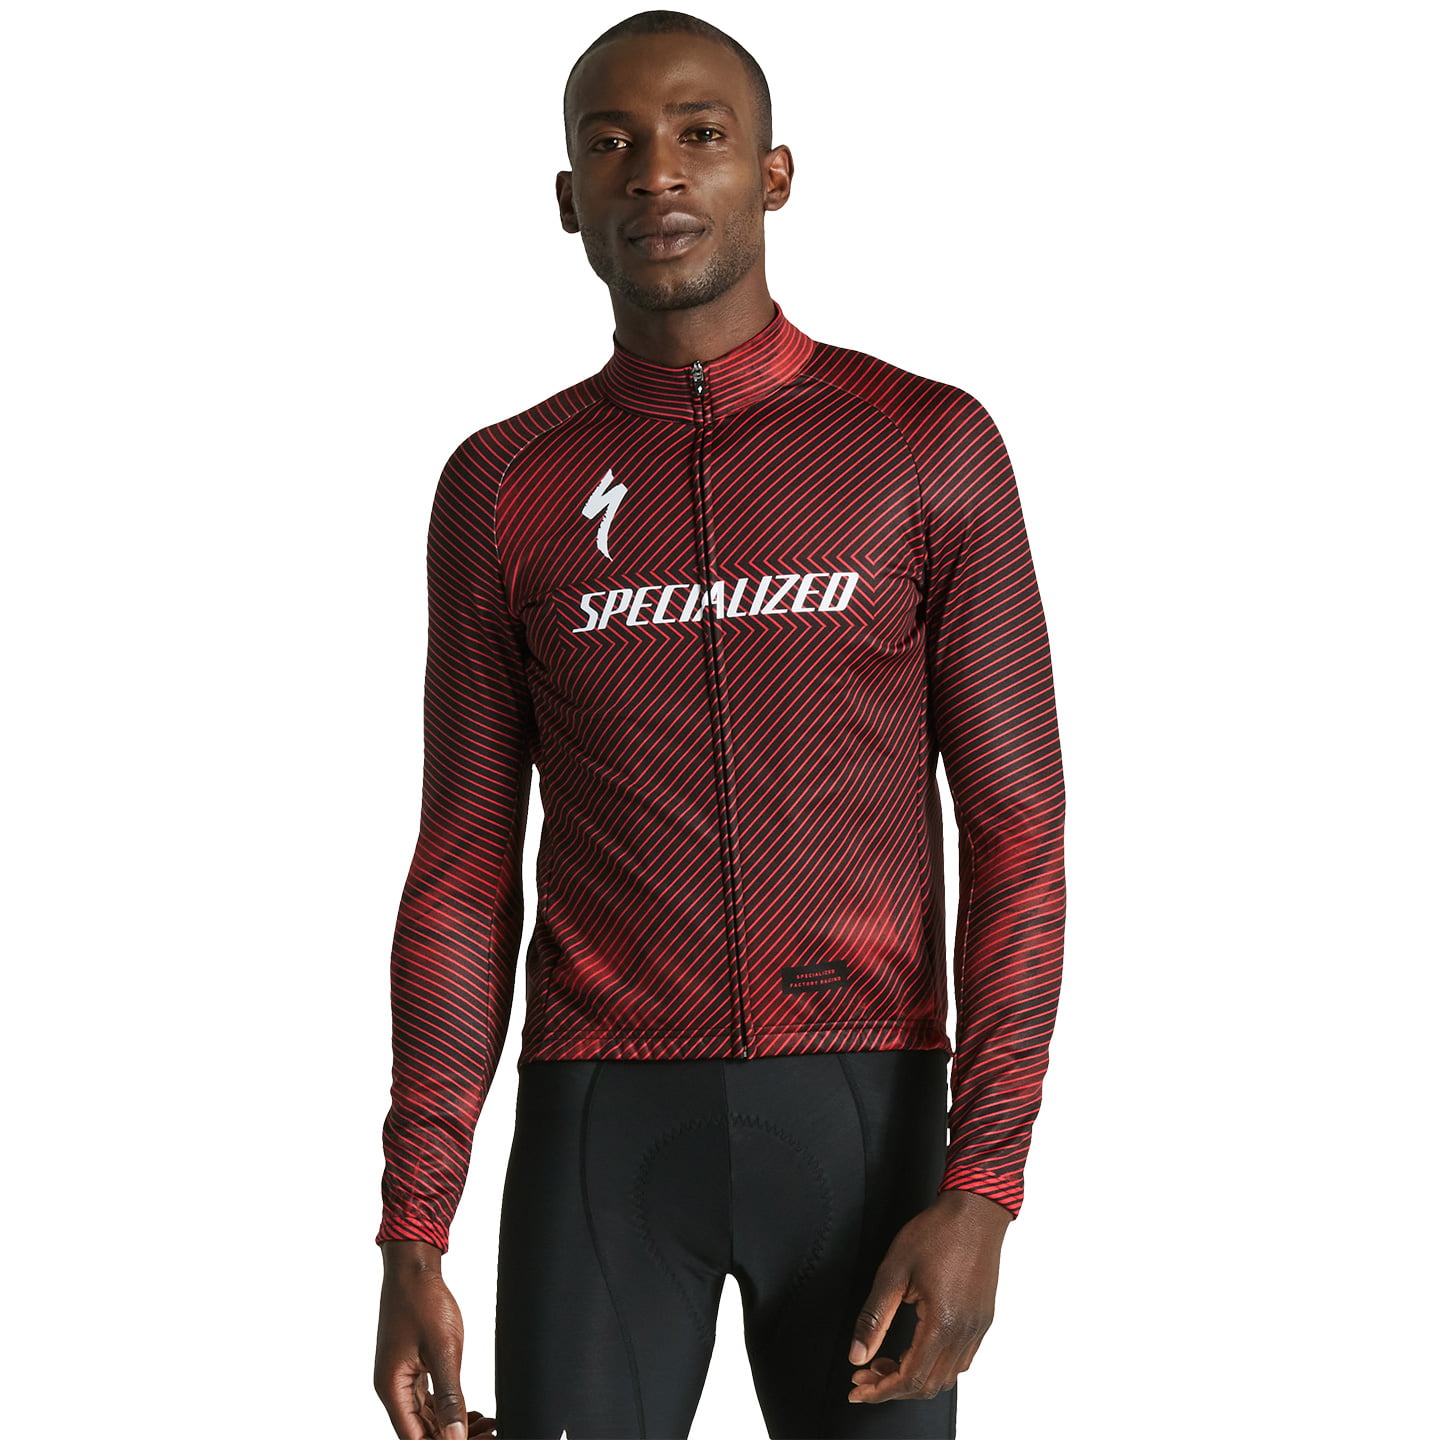 SPECIALIZED Team SL Expert Long Sleeve Jersey Light Jacket, for men, size XL, Bike jacket, Cycle gear